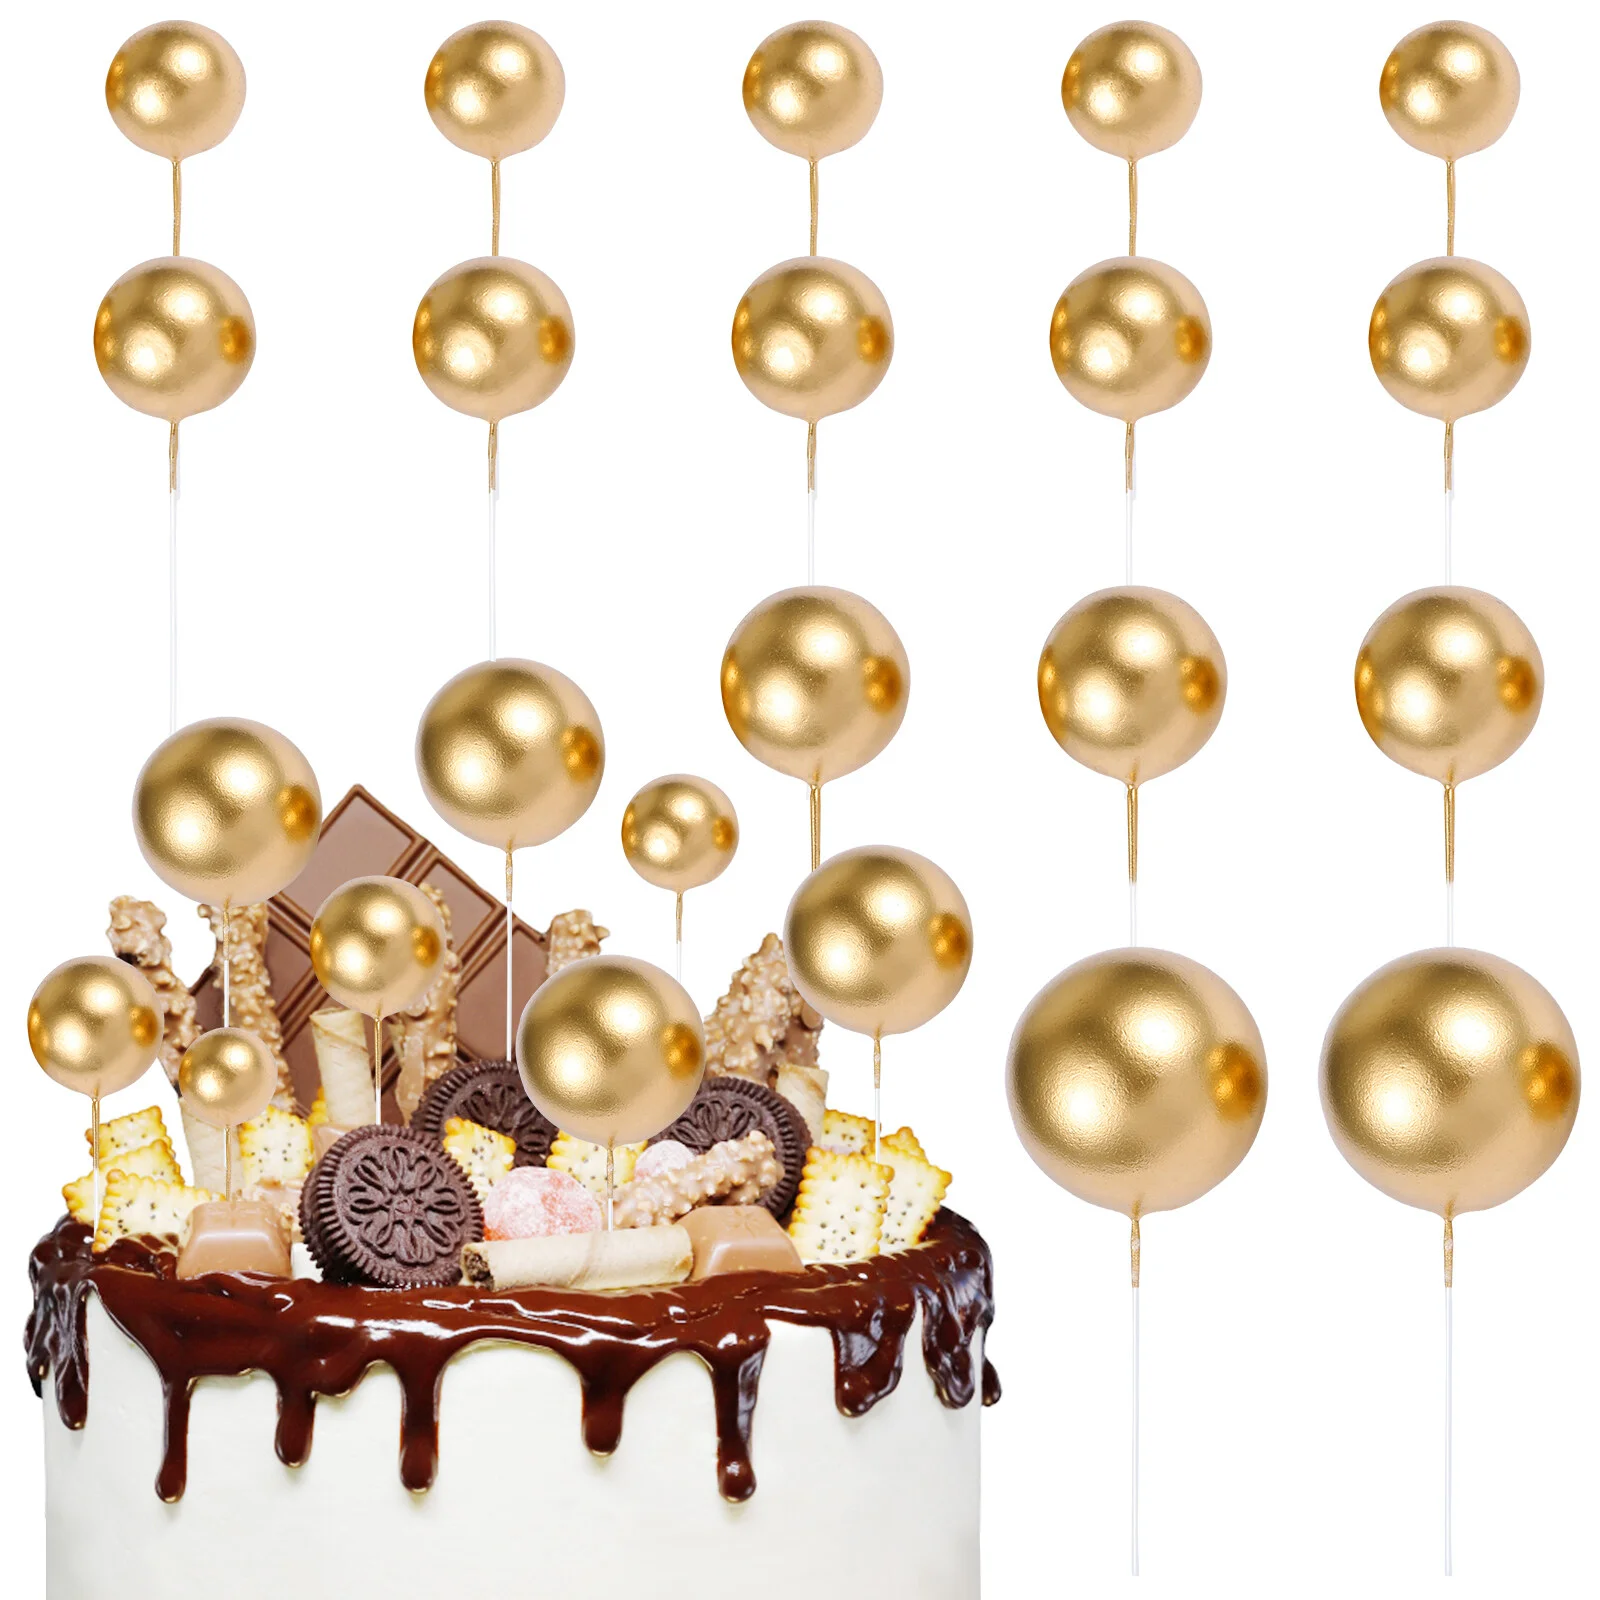 

Десертная подставка для торта, декоративная необычная вставка, подставки для кексов